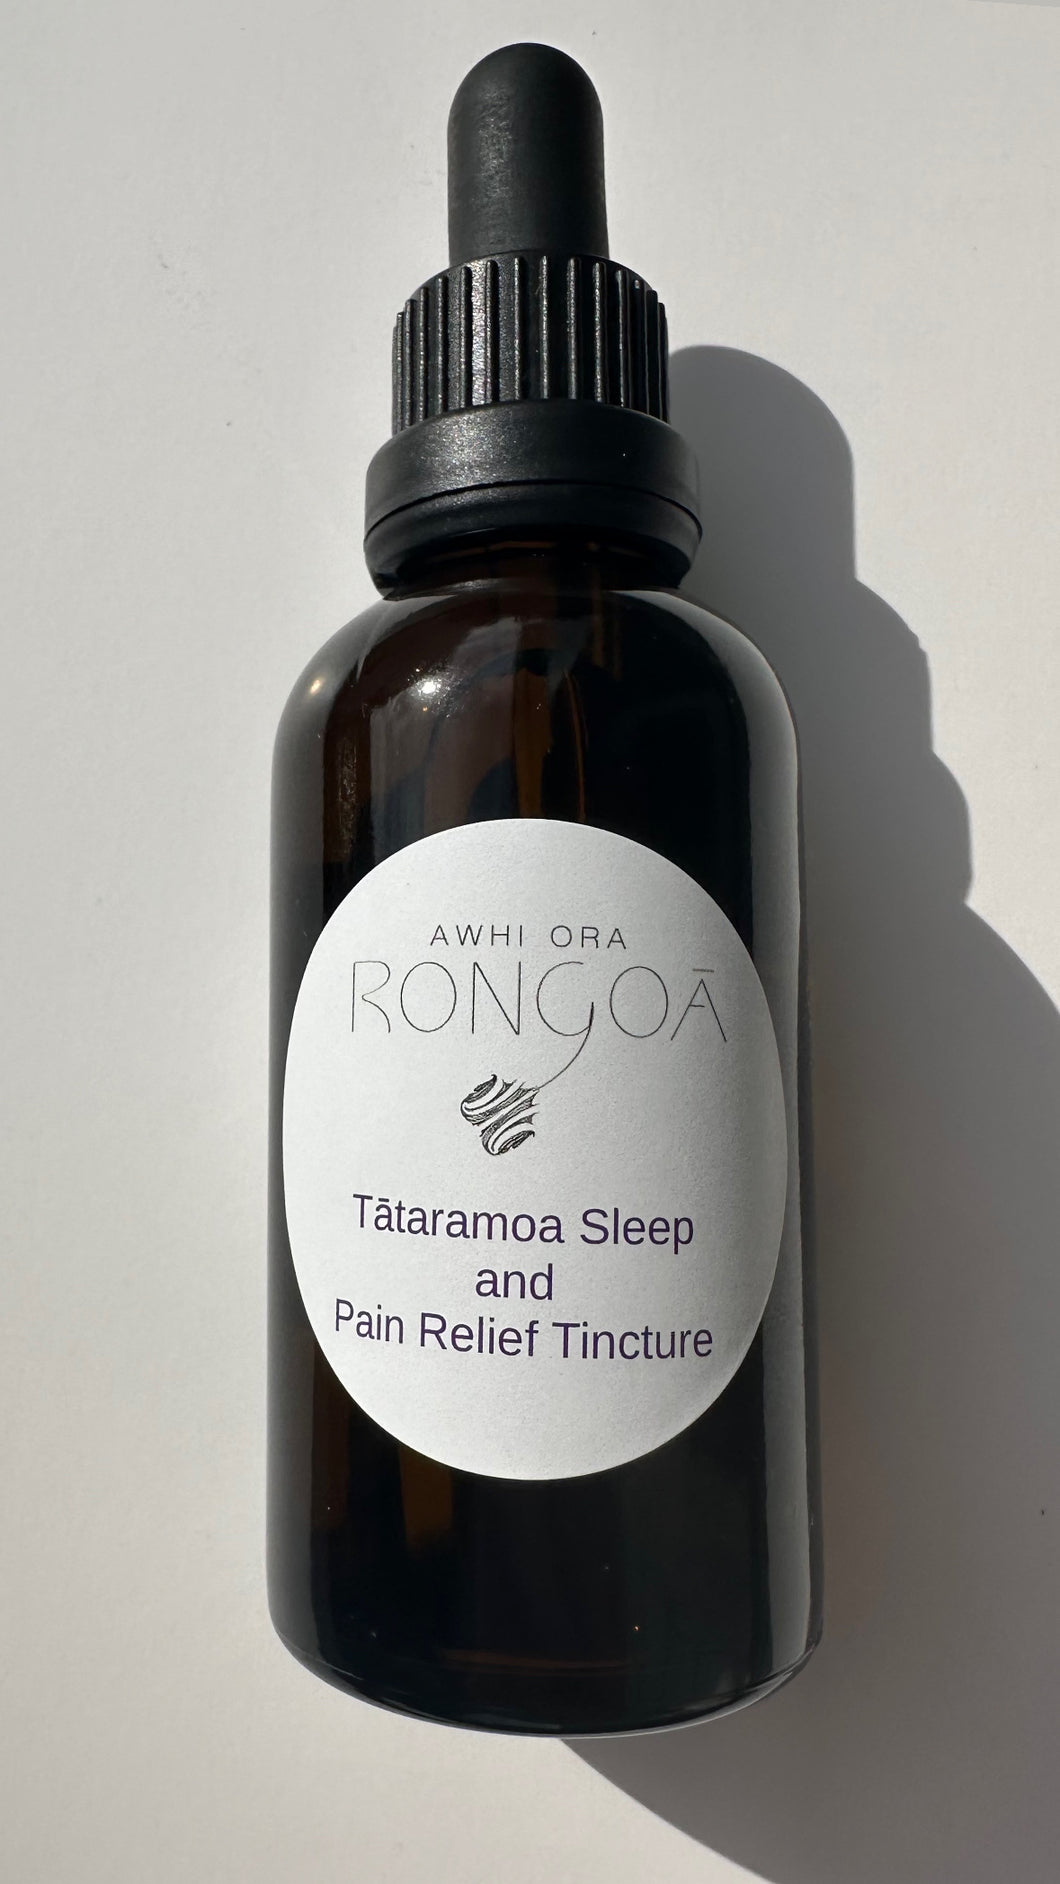 Tātaramoa Sleep and Pain Relief Tincture